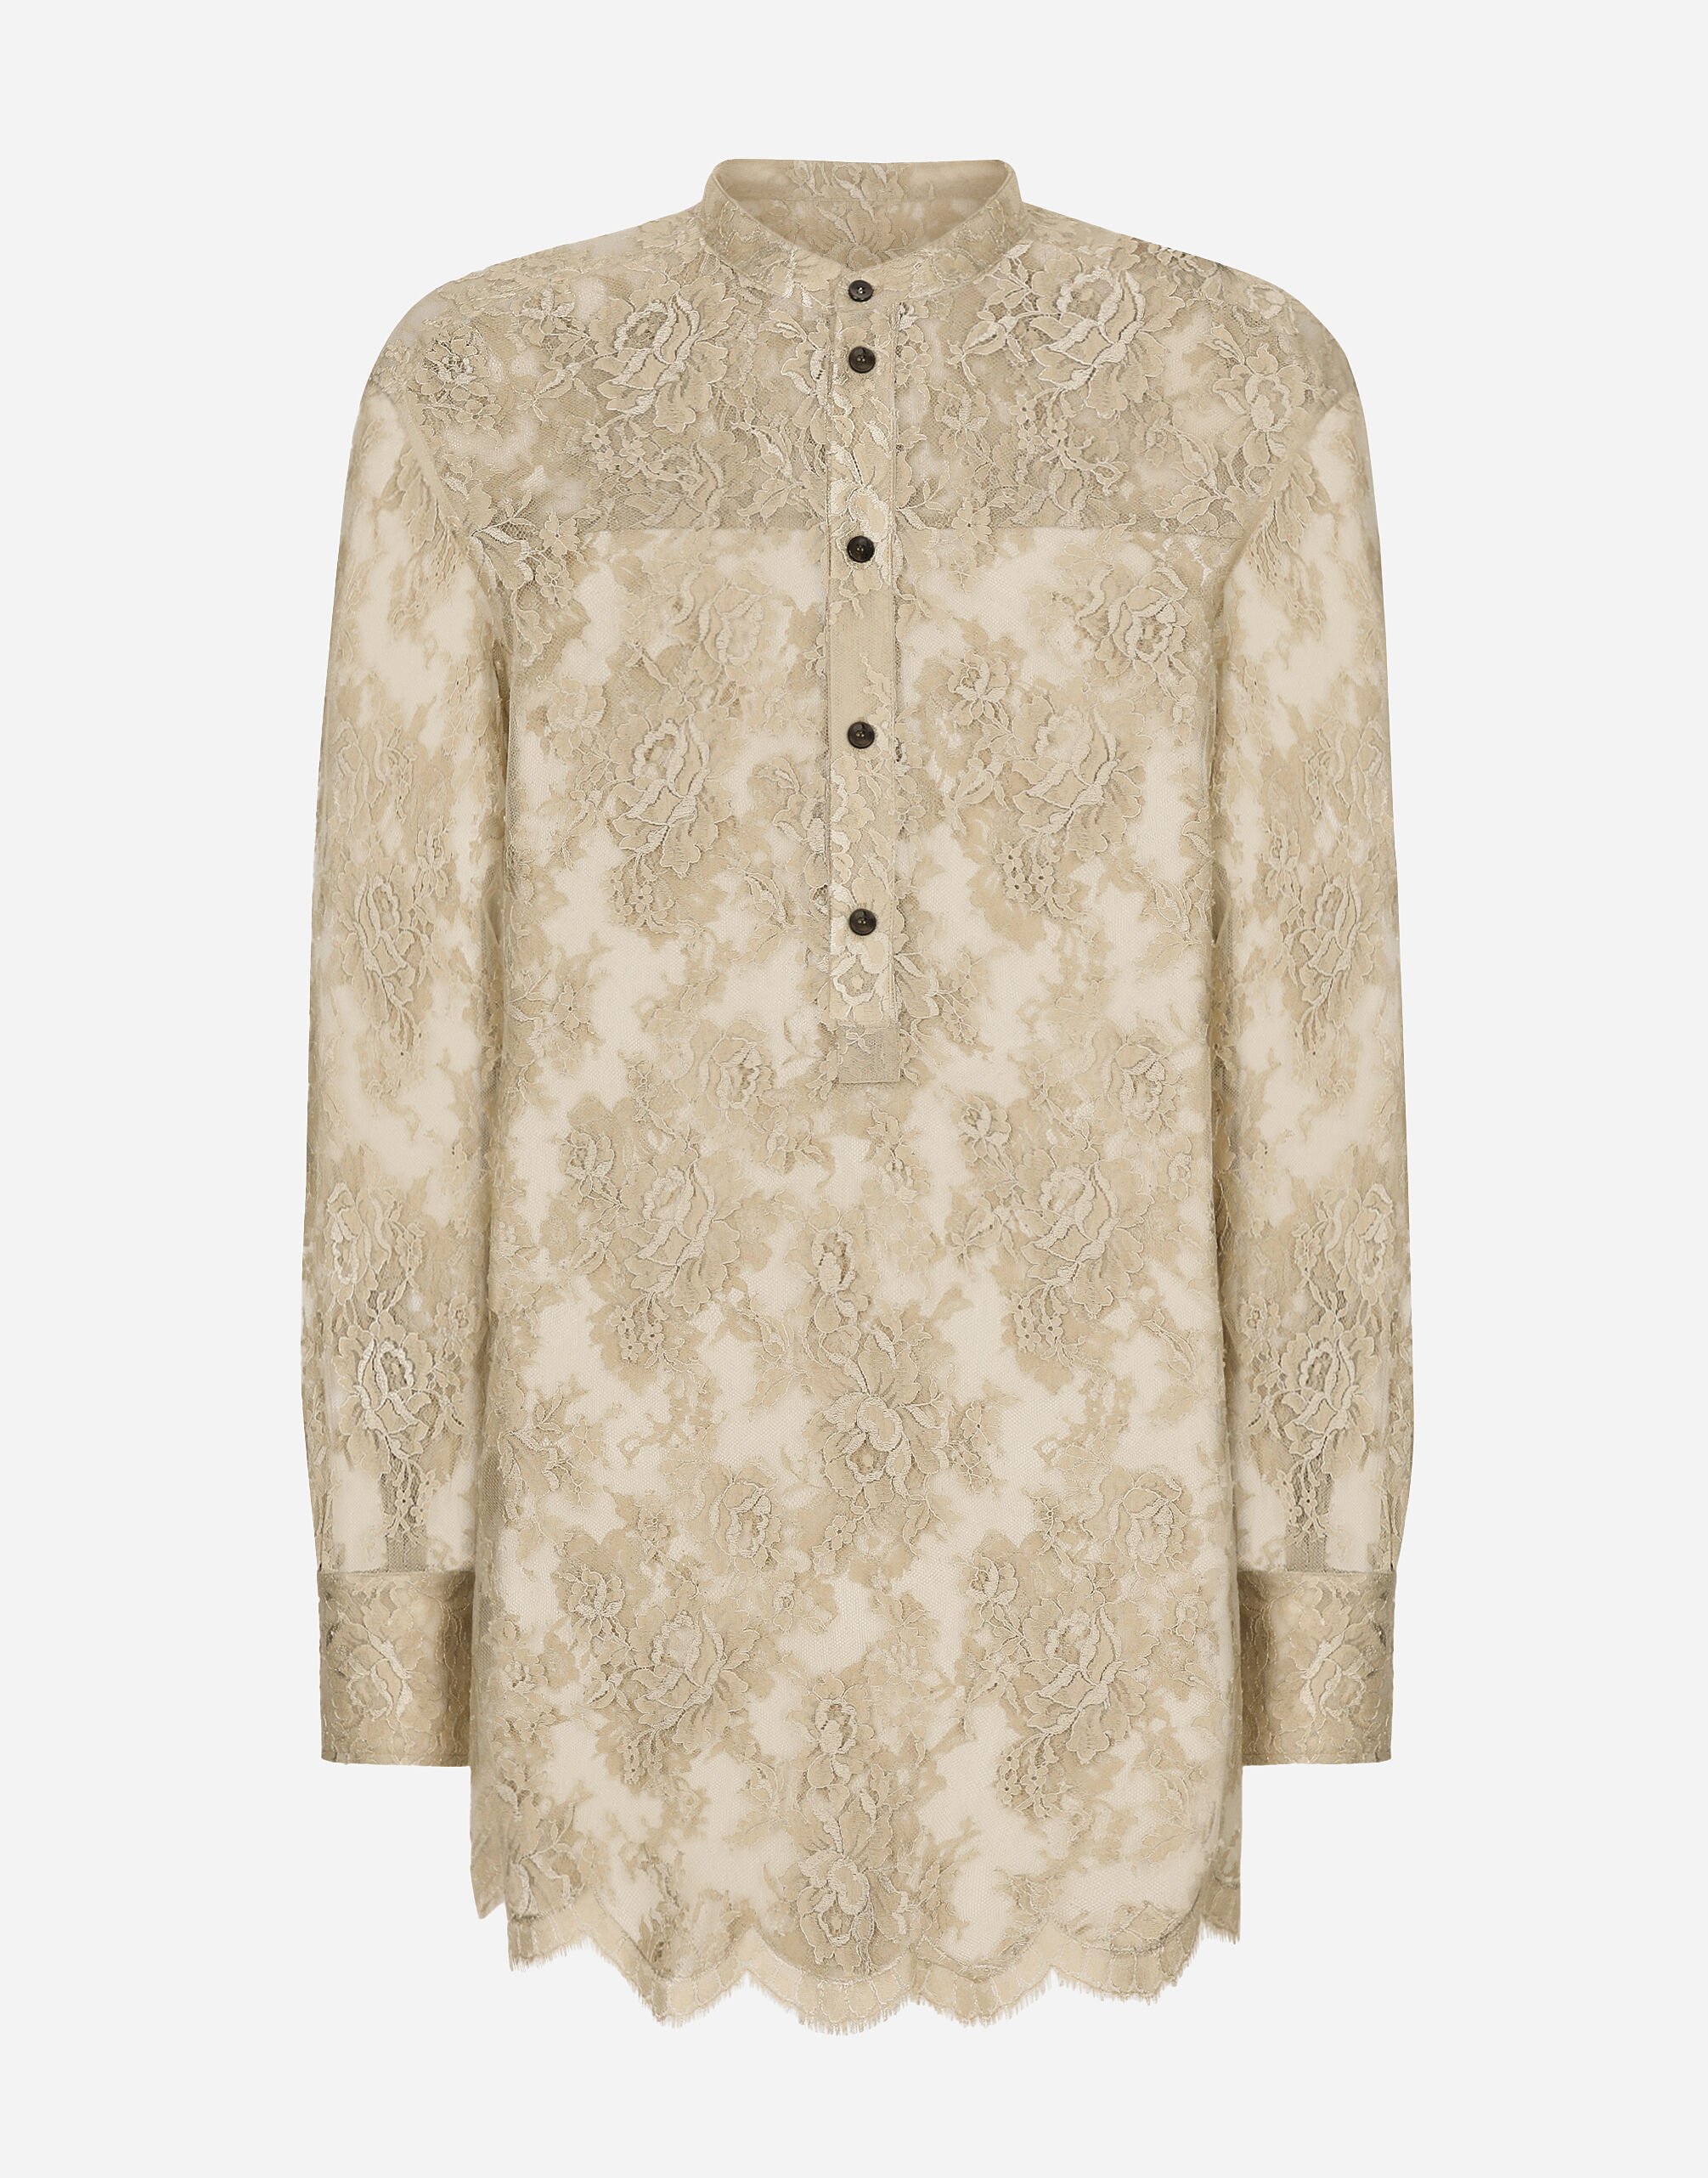 Dolce & Gabbana قميص دانتيل غالون بياقة ماندارين متعدد الألوان G2TN4TFR20N